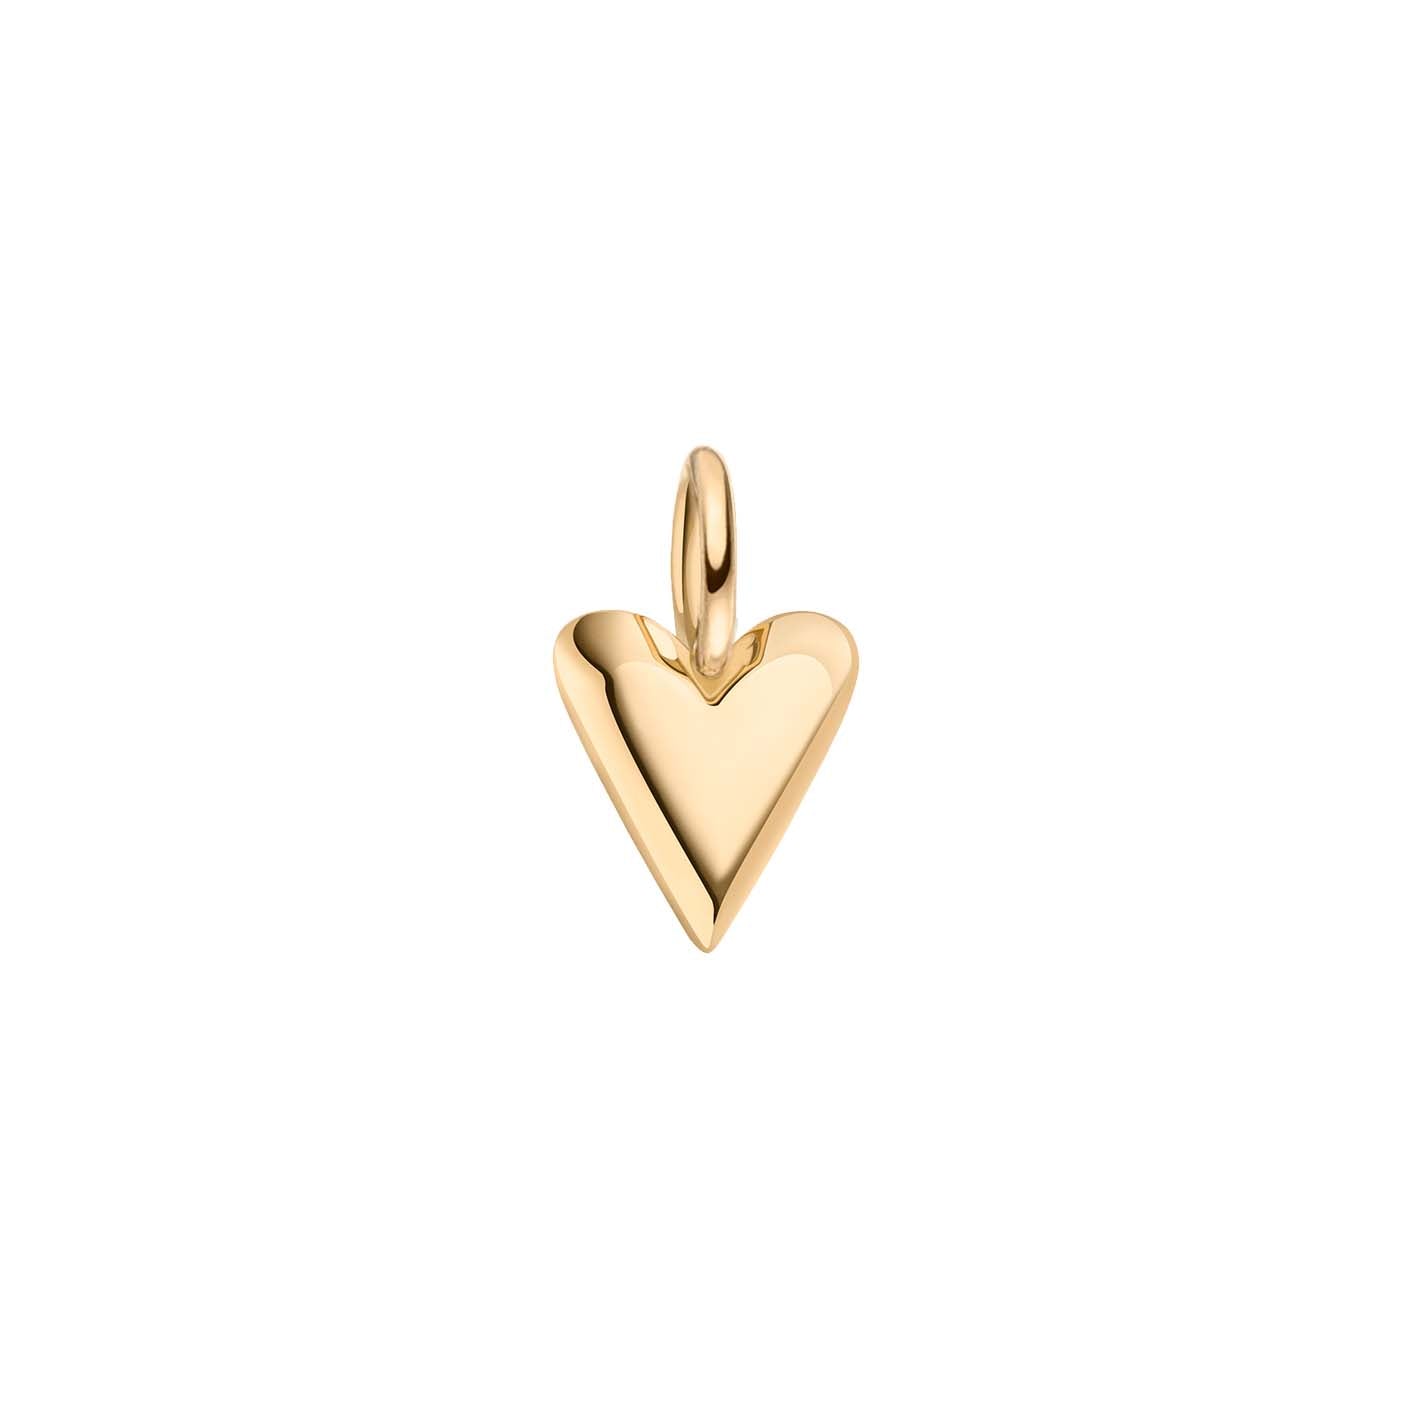 Be my Heart: heart pendant